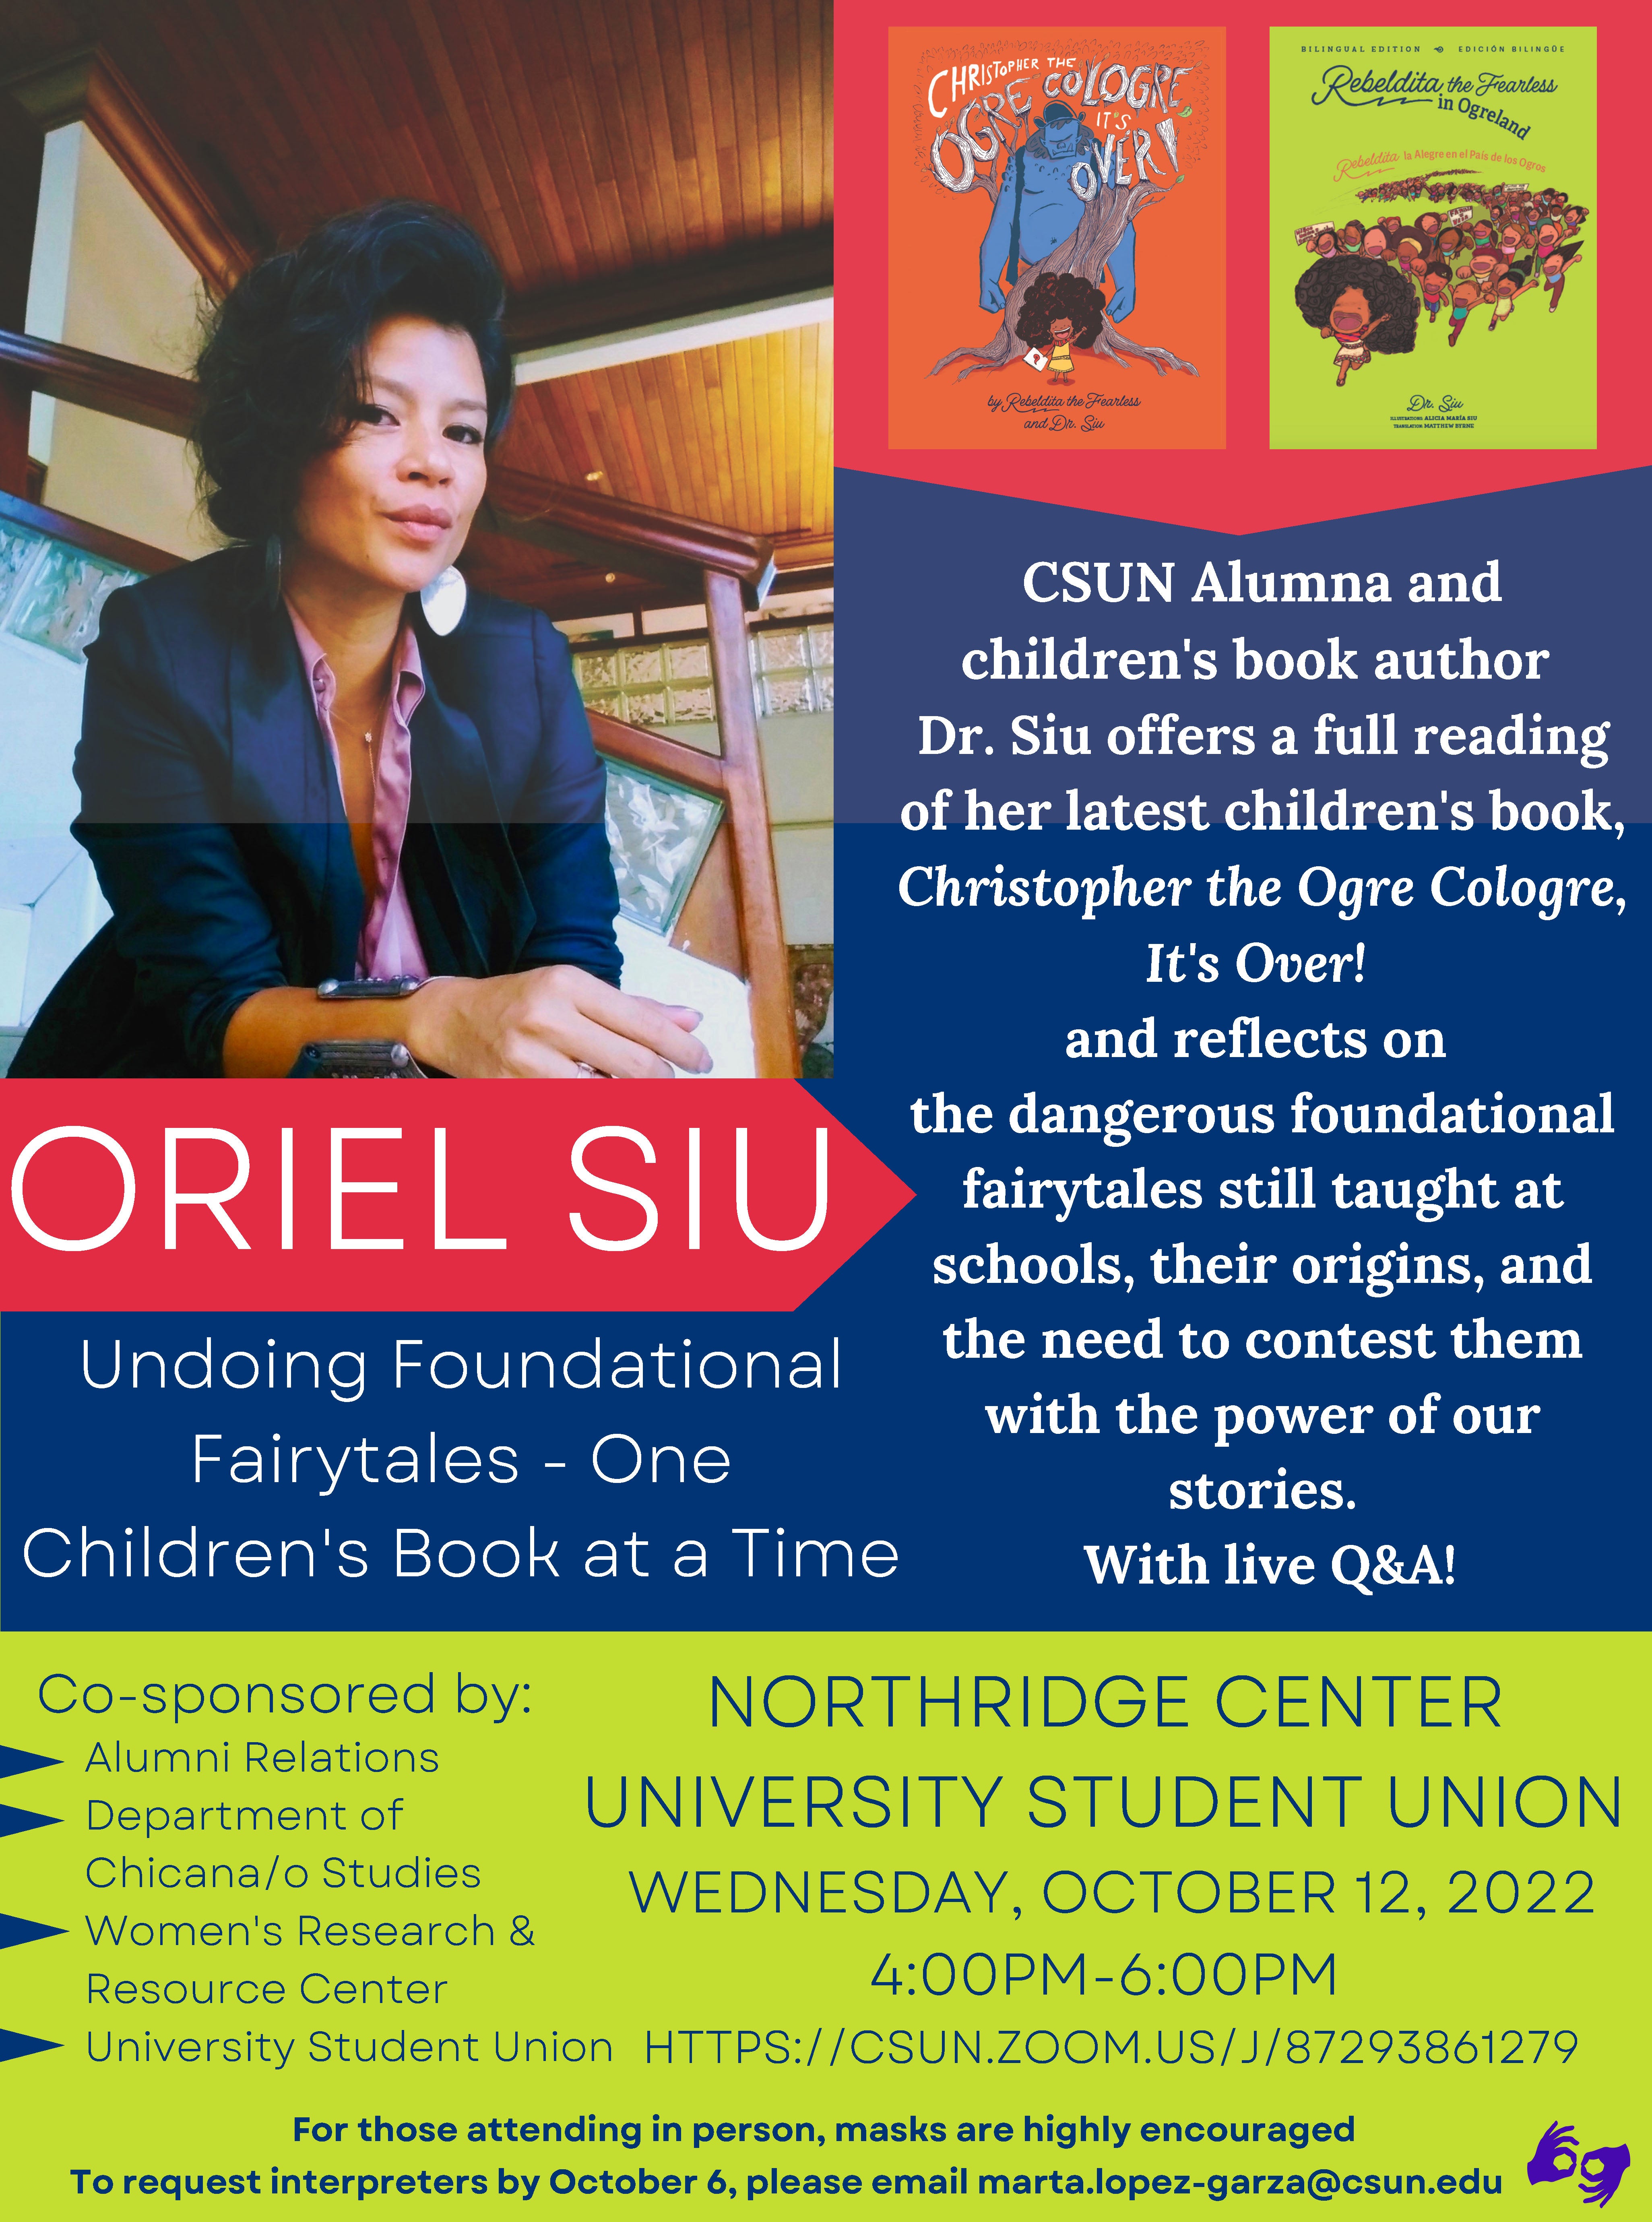 Oriel Siu - Undoing Foundational Fairytales